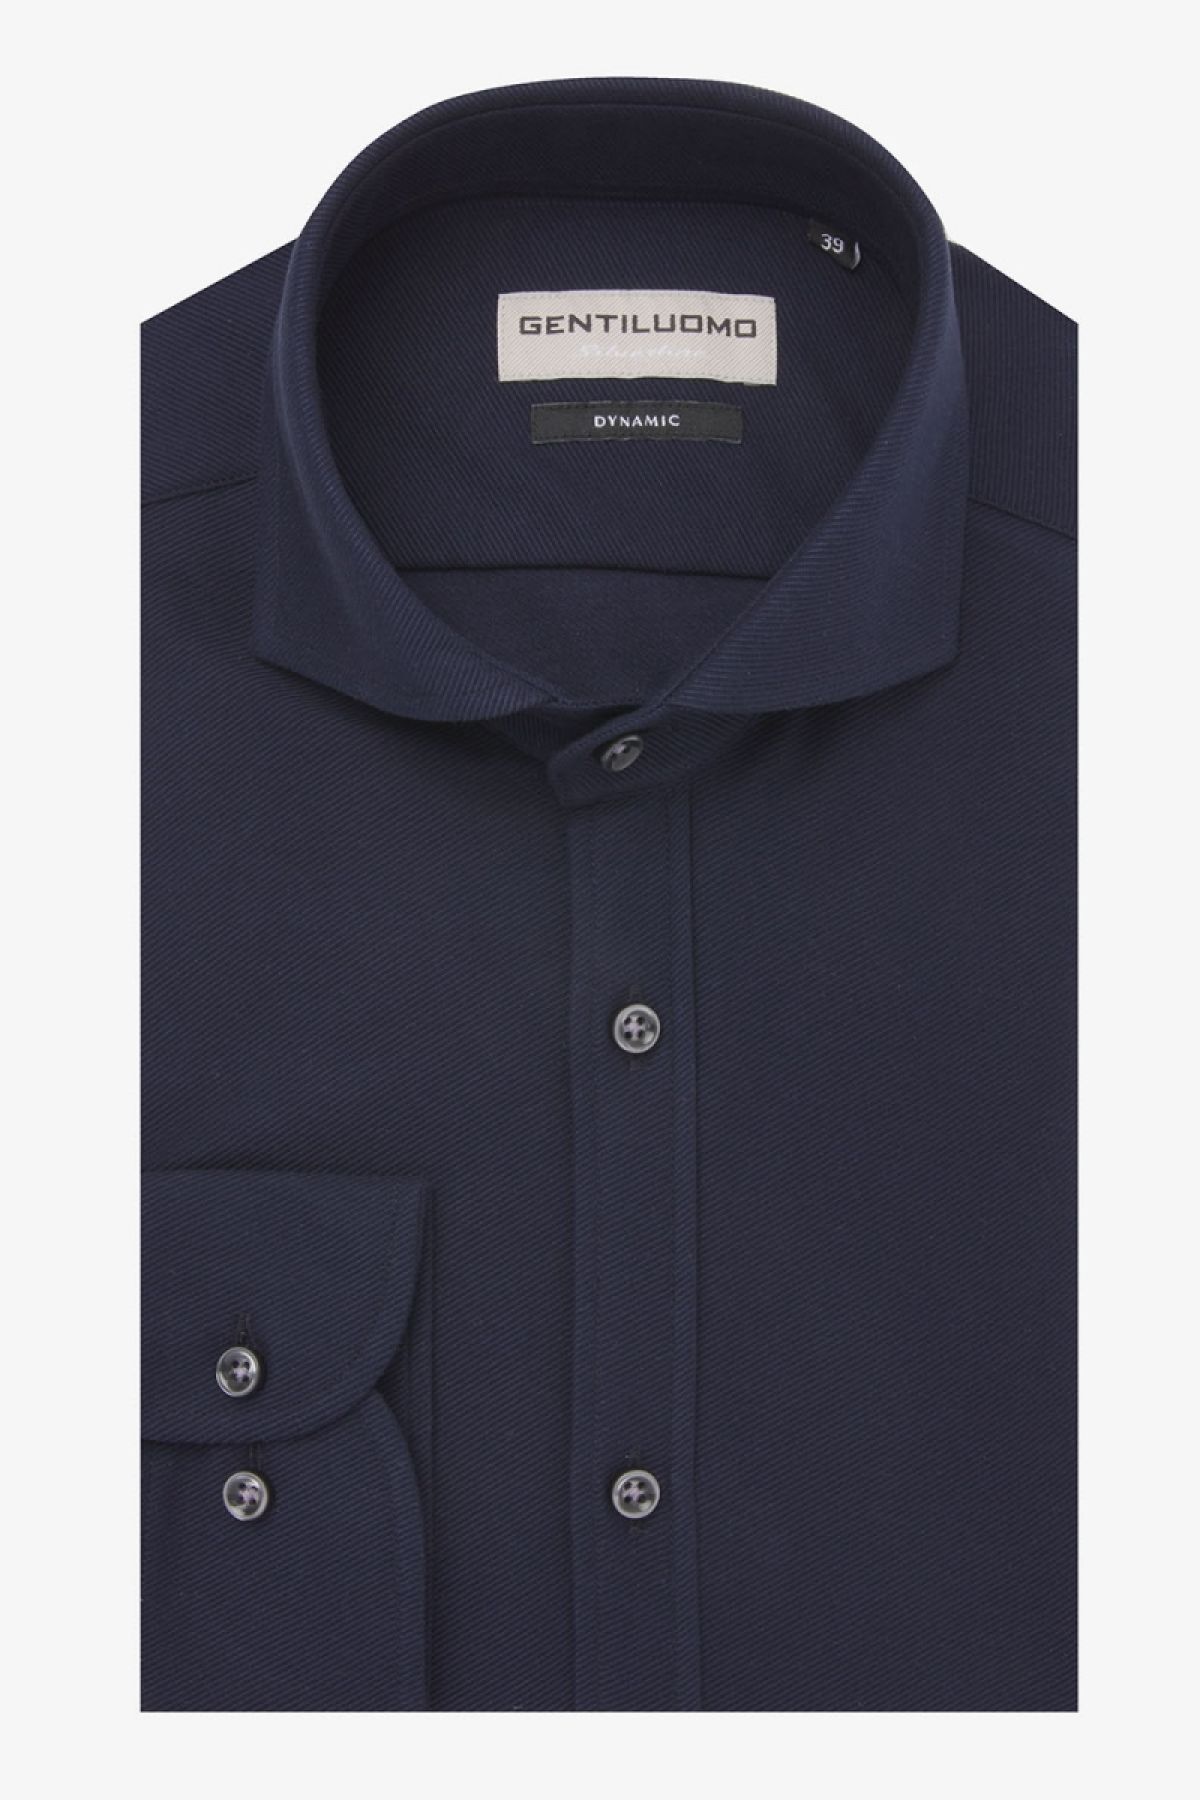 Dynamic overhemd fashion-fit donkerblauw